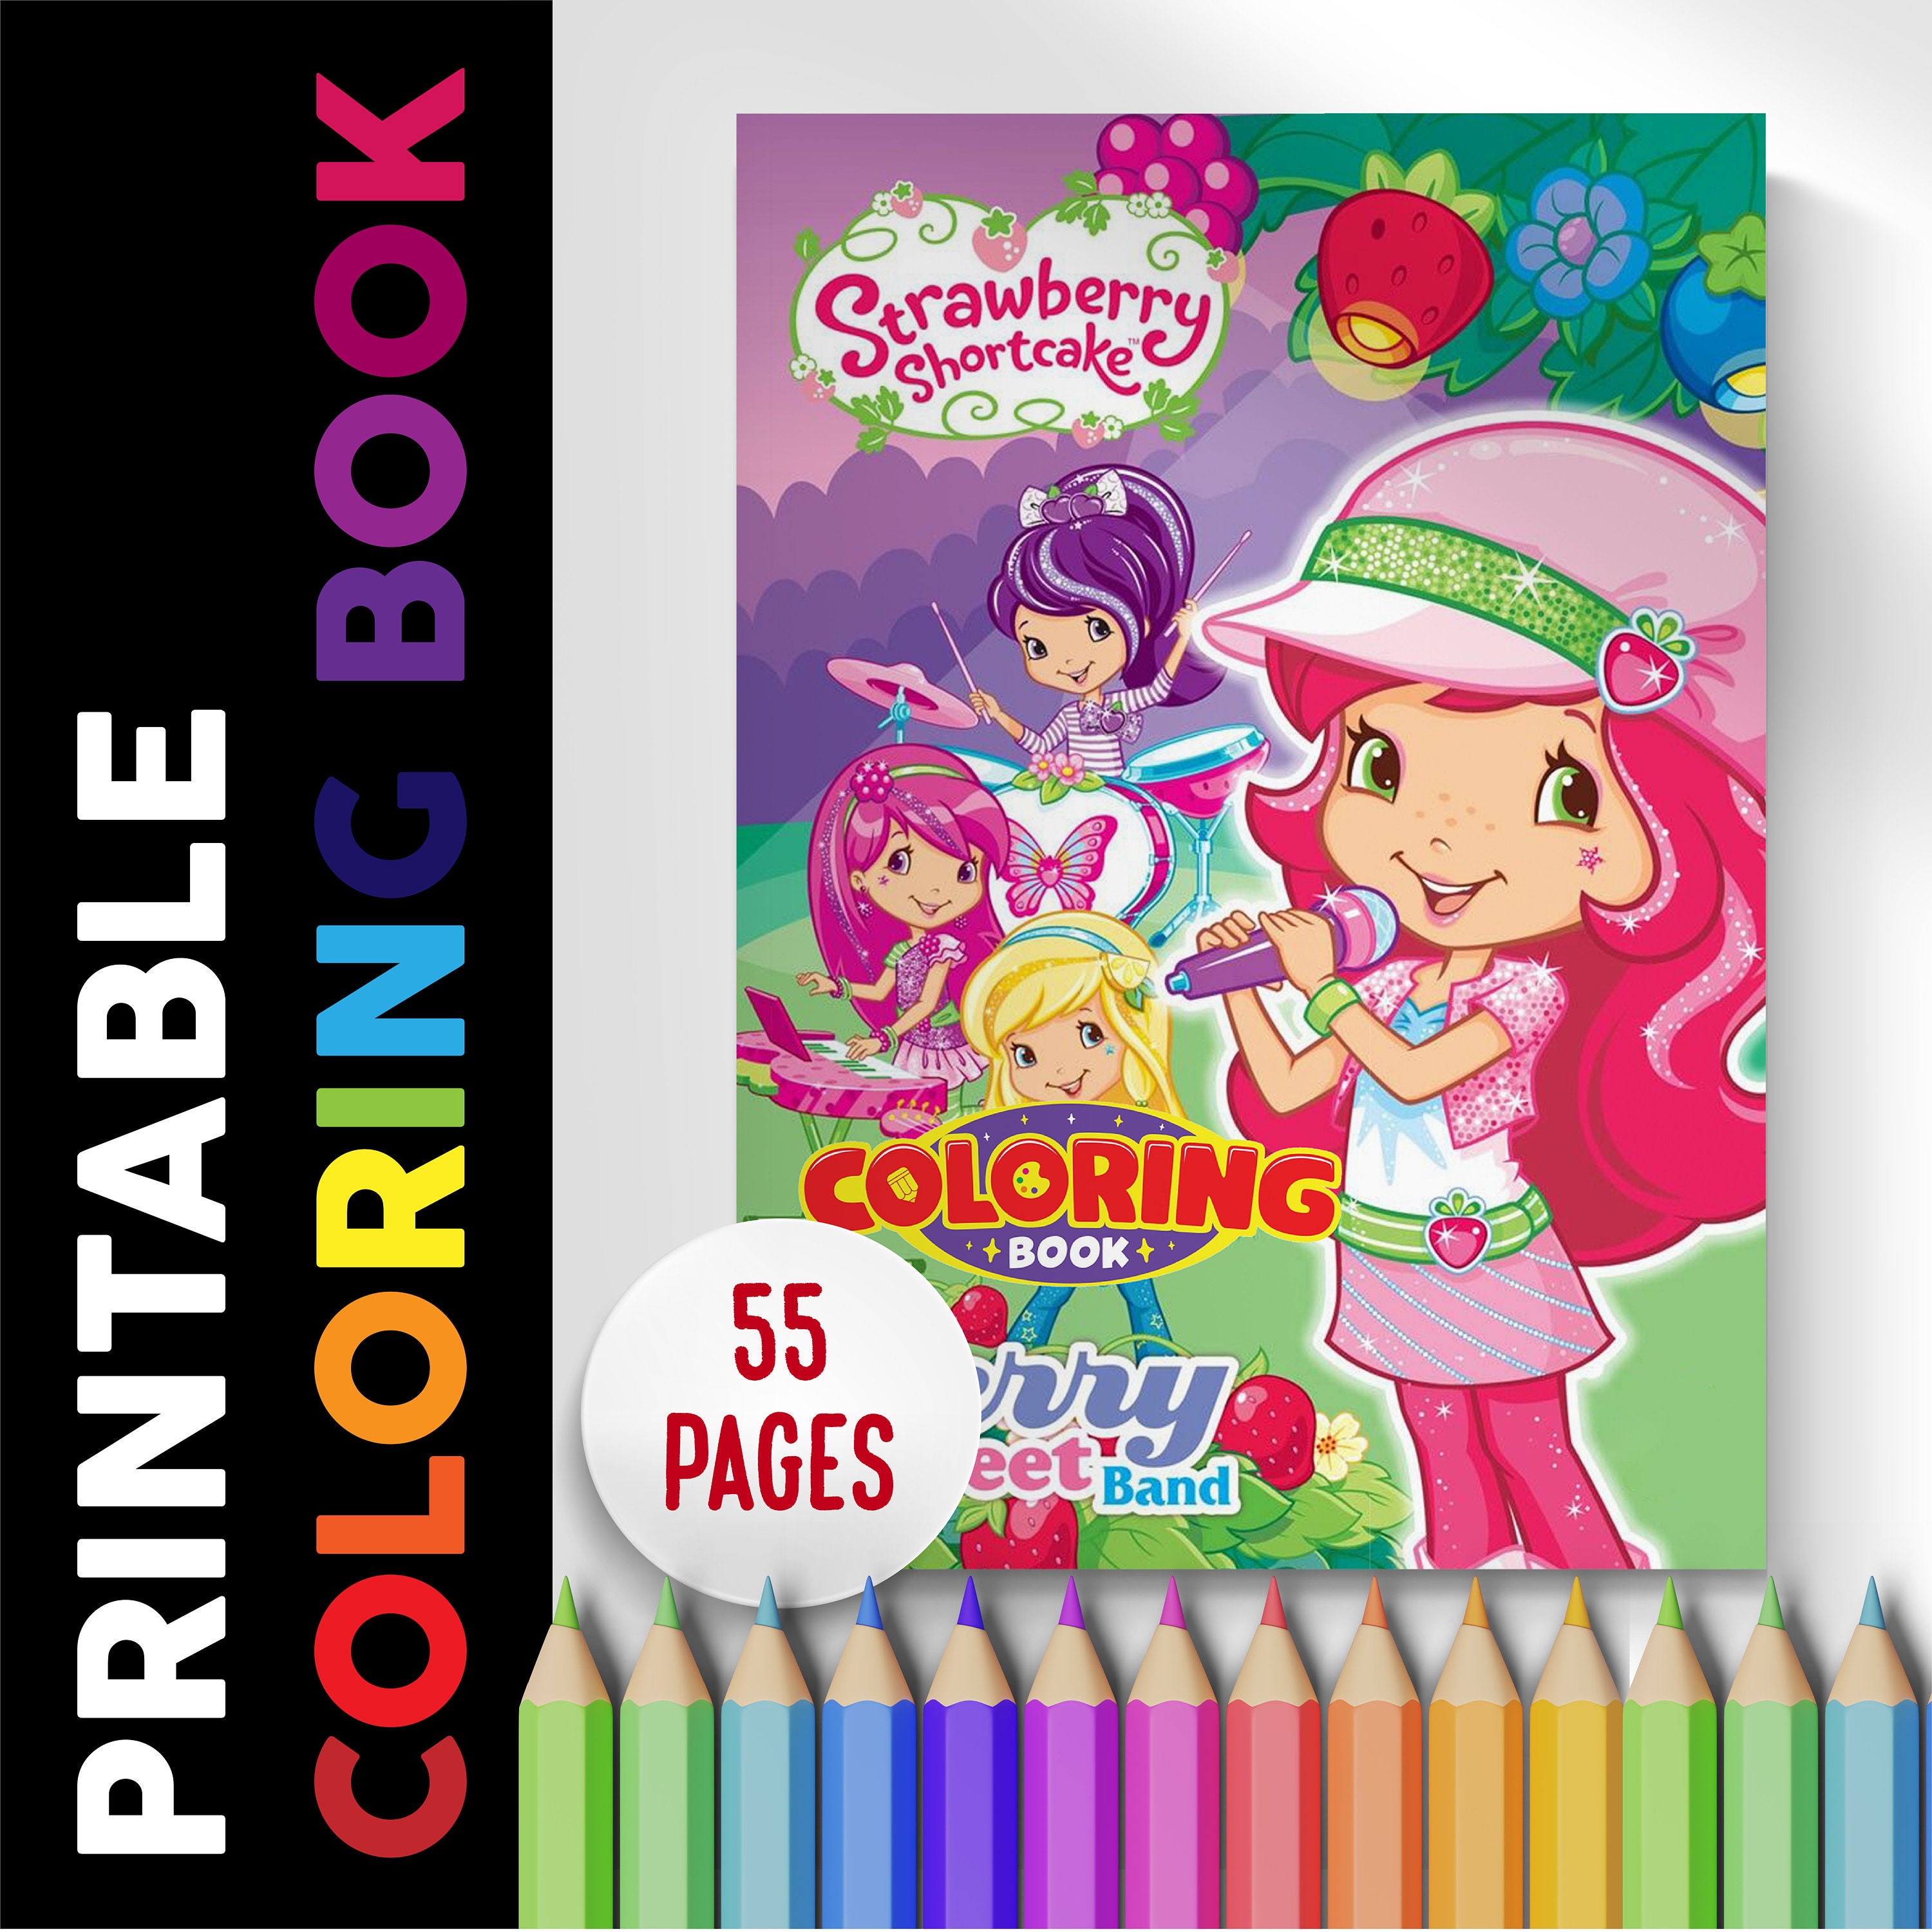 NEW 2017 Strawberry Shortcake Advanced Coloring Book. 